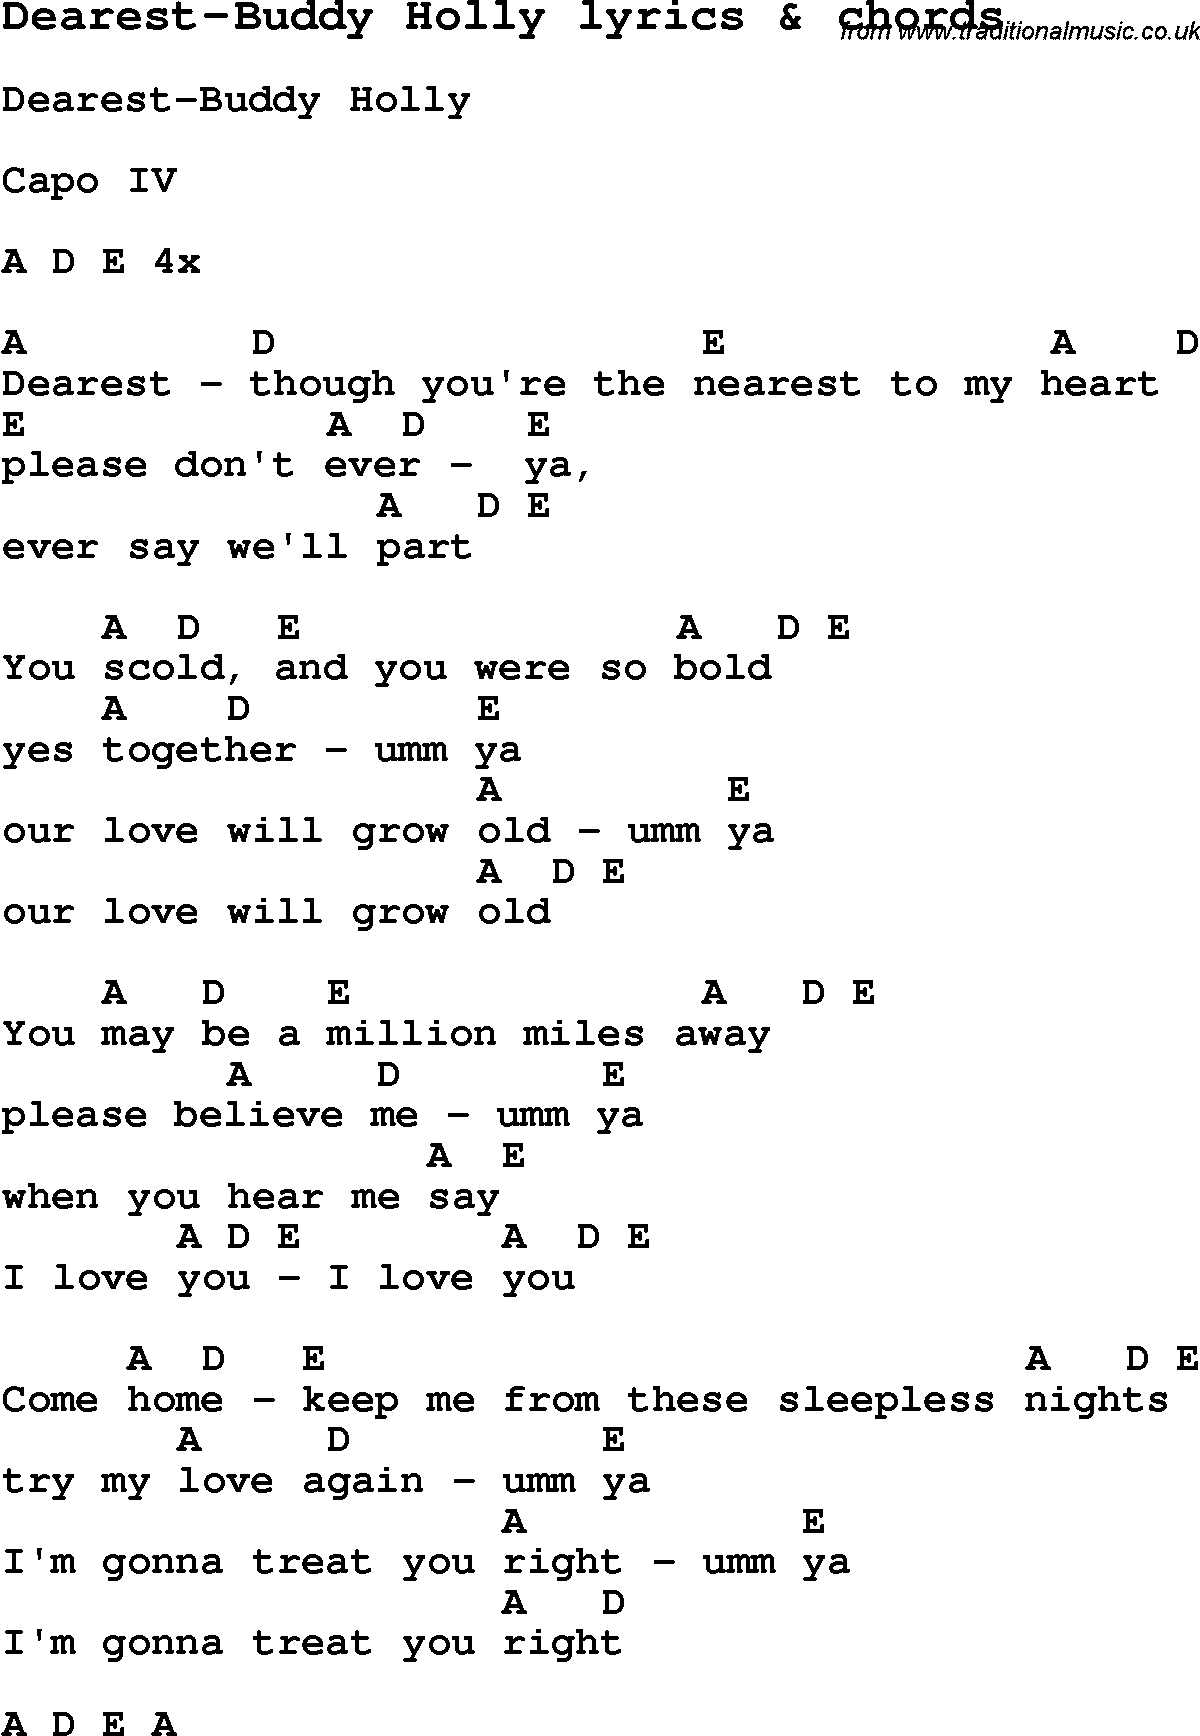 Love Song Lyrics for: Dearest-Buddy Holly with chords for Ukulele, Guitar Banjo etc.